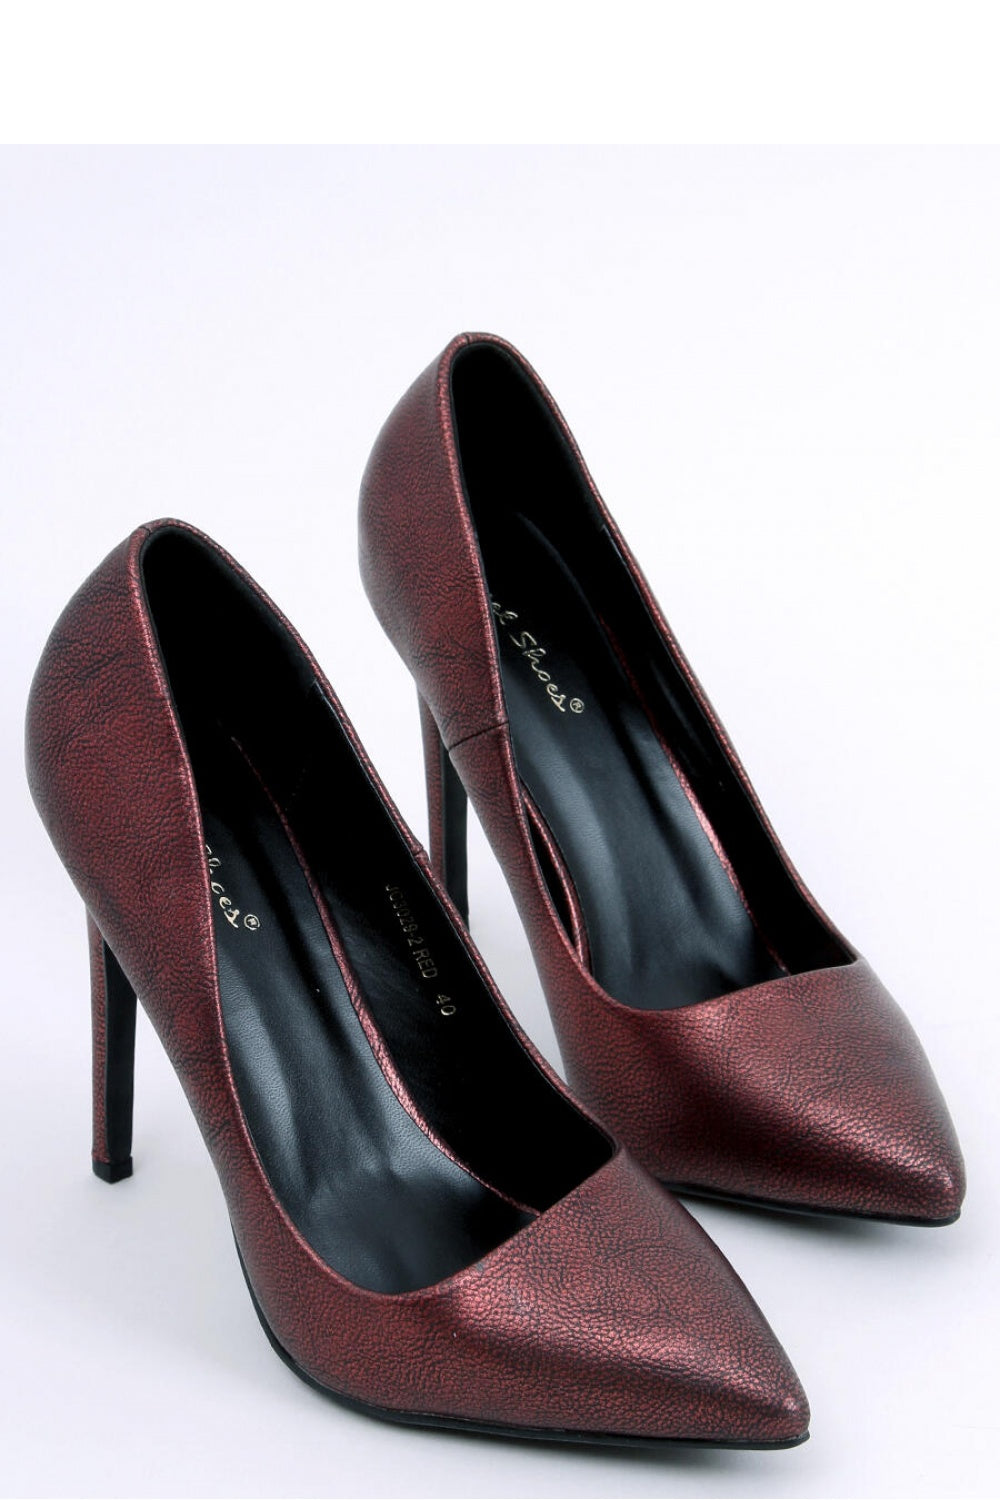 High heels model 174121 Inello Posh Styles Apparel